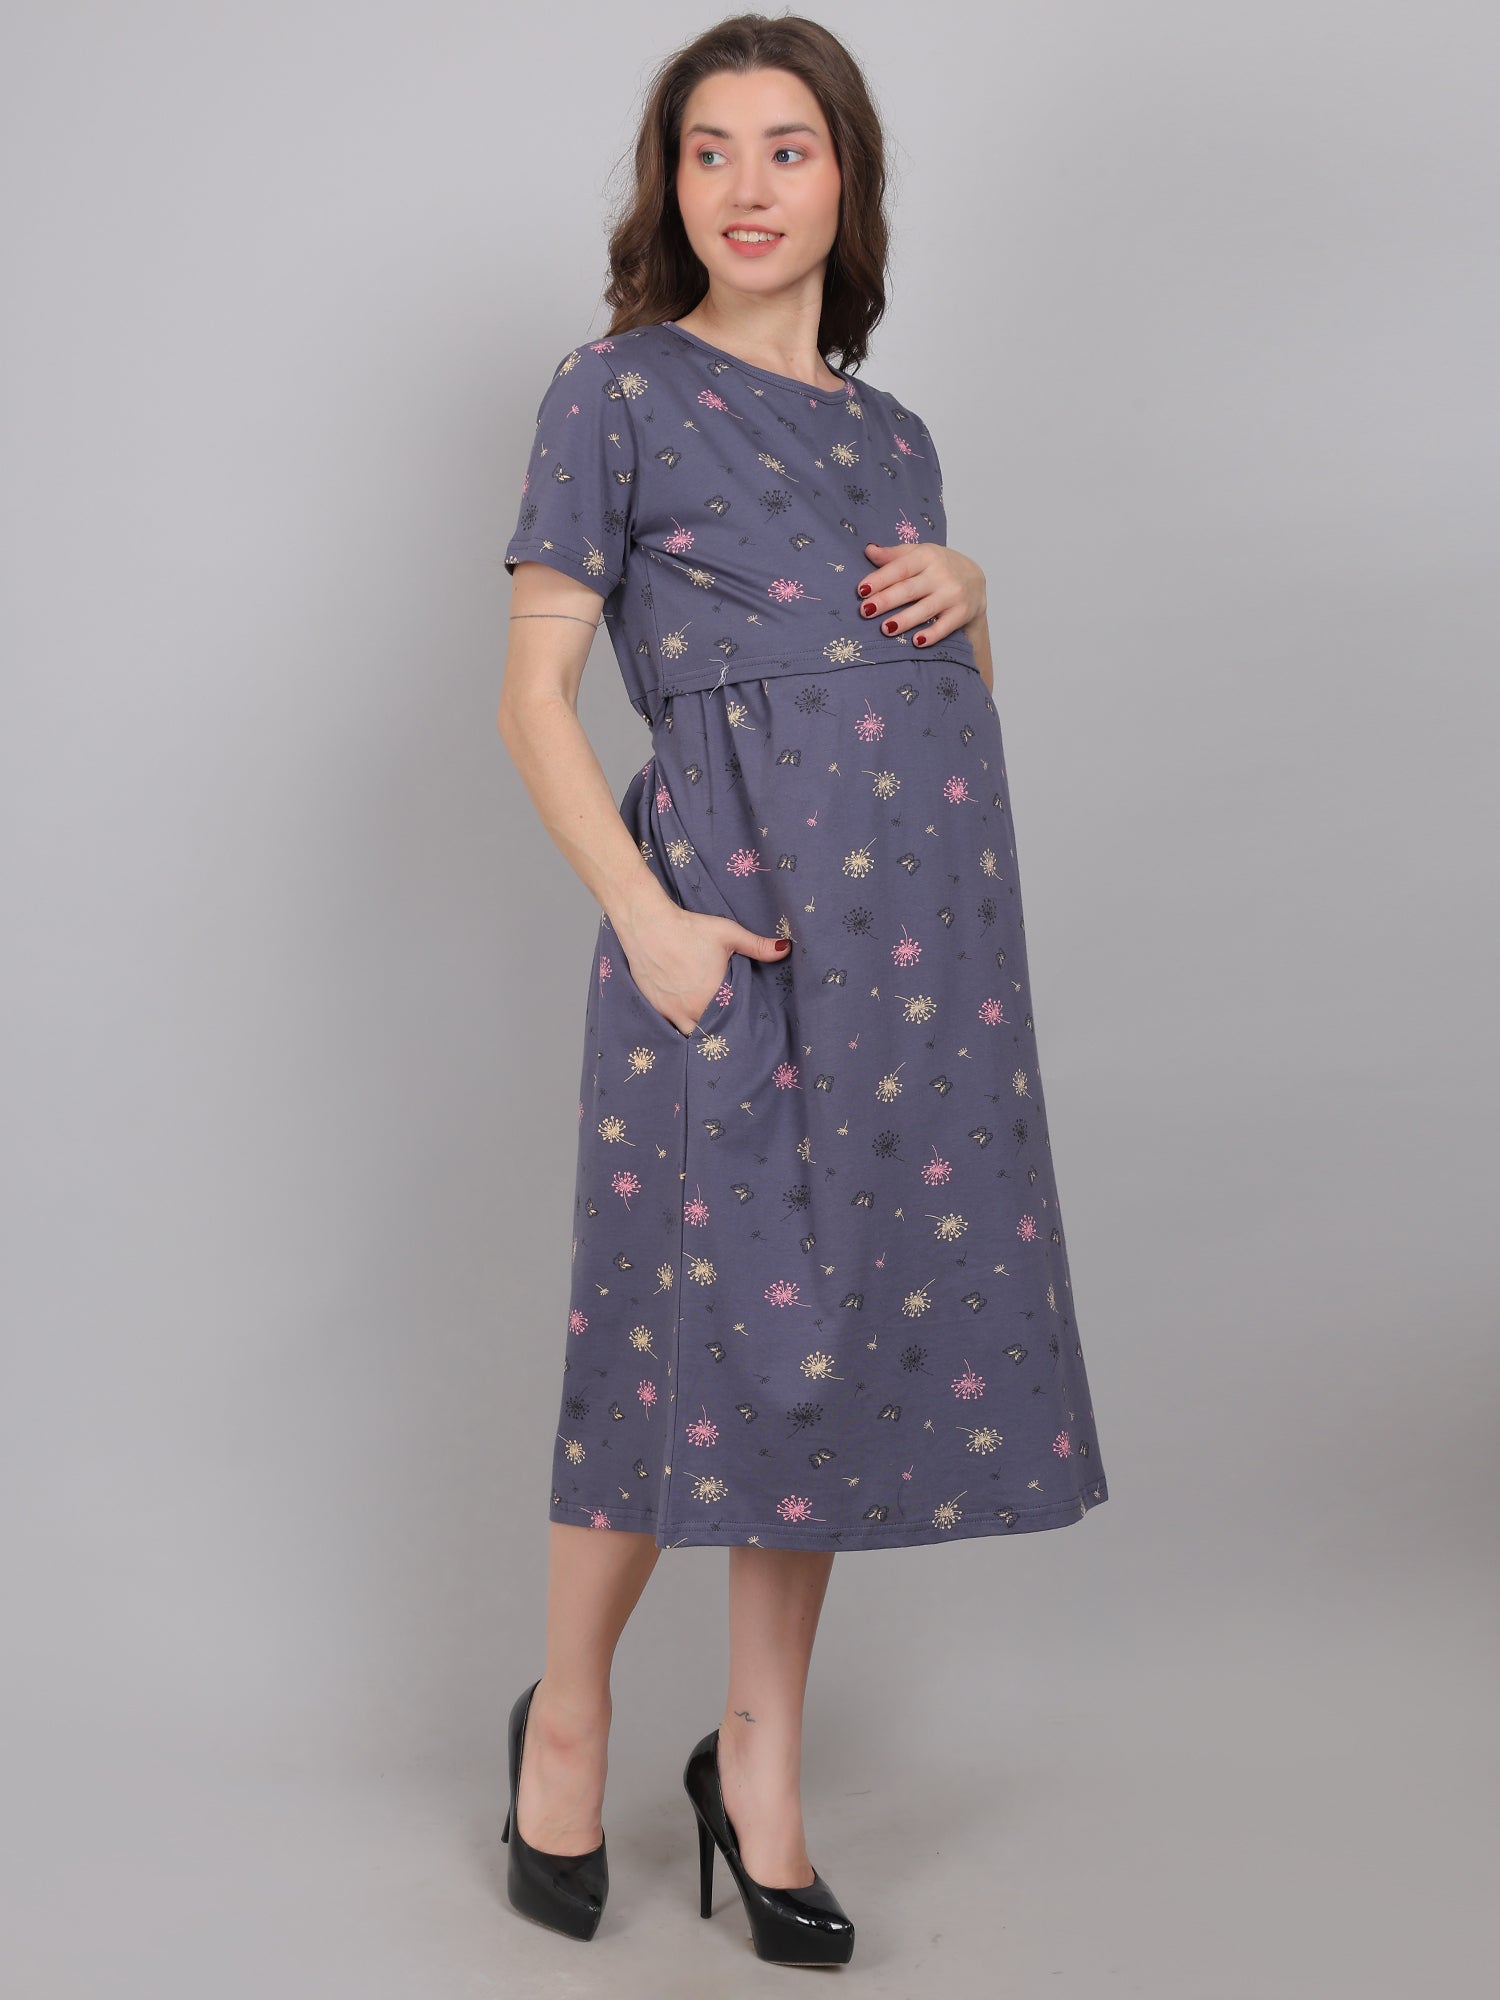 Charcoal Grey Knitted Cotton Maternity Loungewear Dress